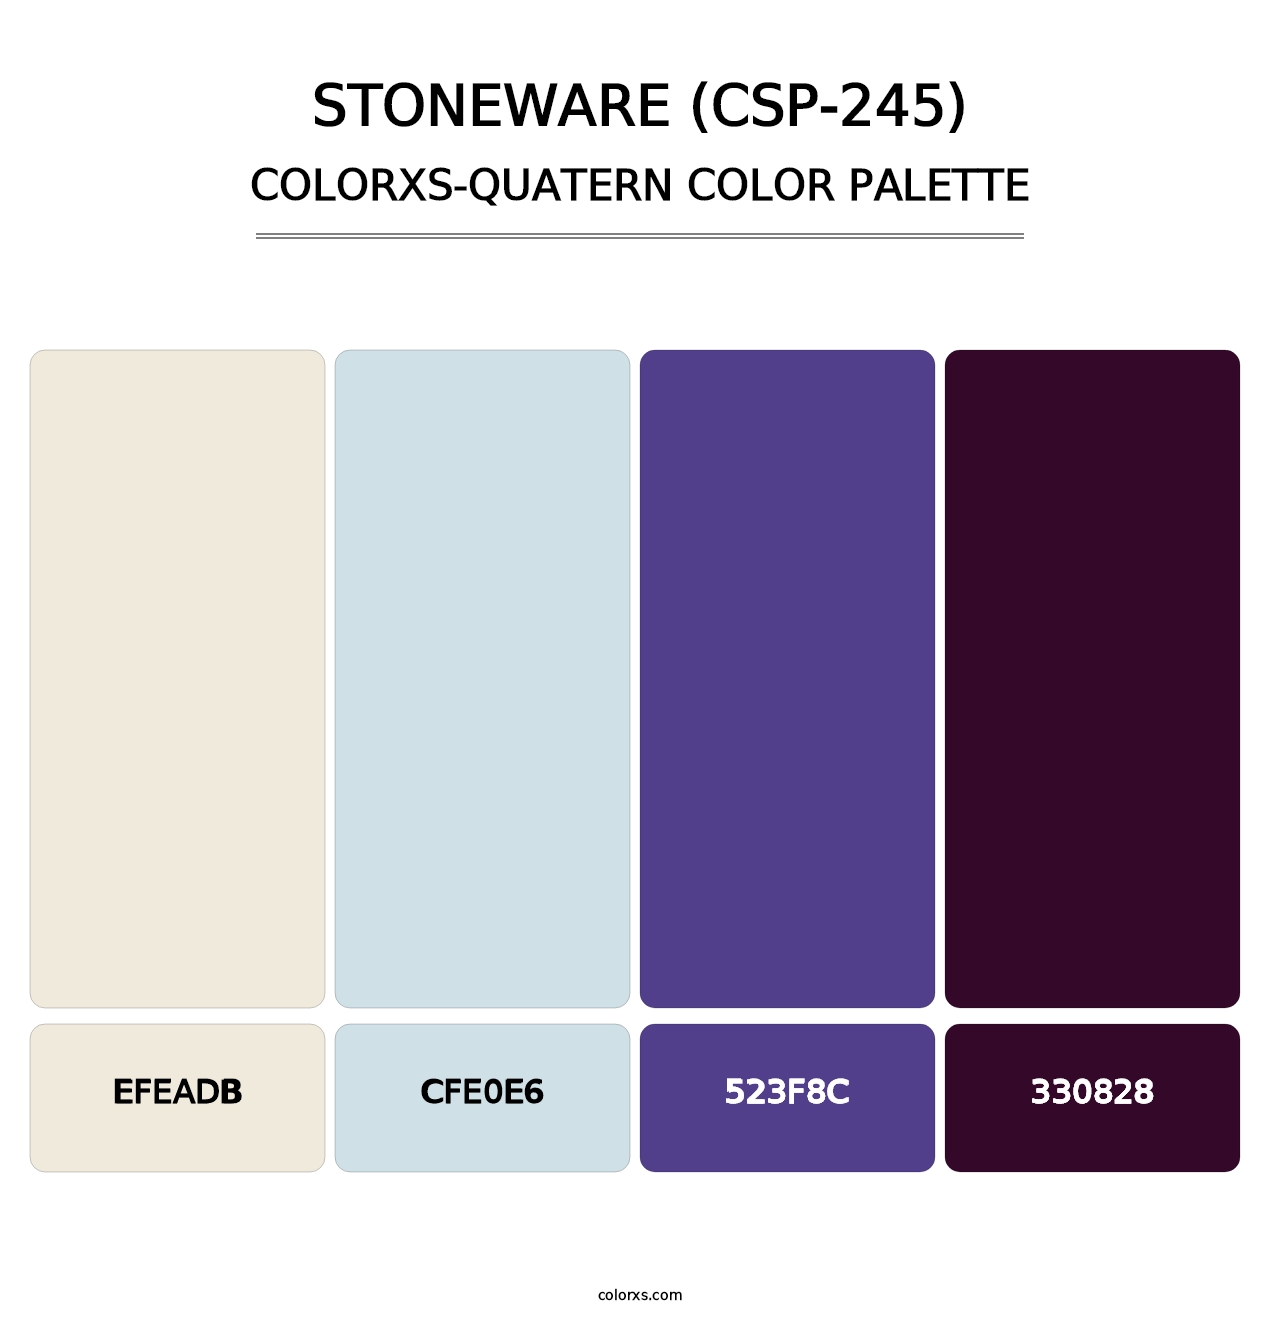 Stoneware (CSP-245) - Colorxs Quatern Palette